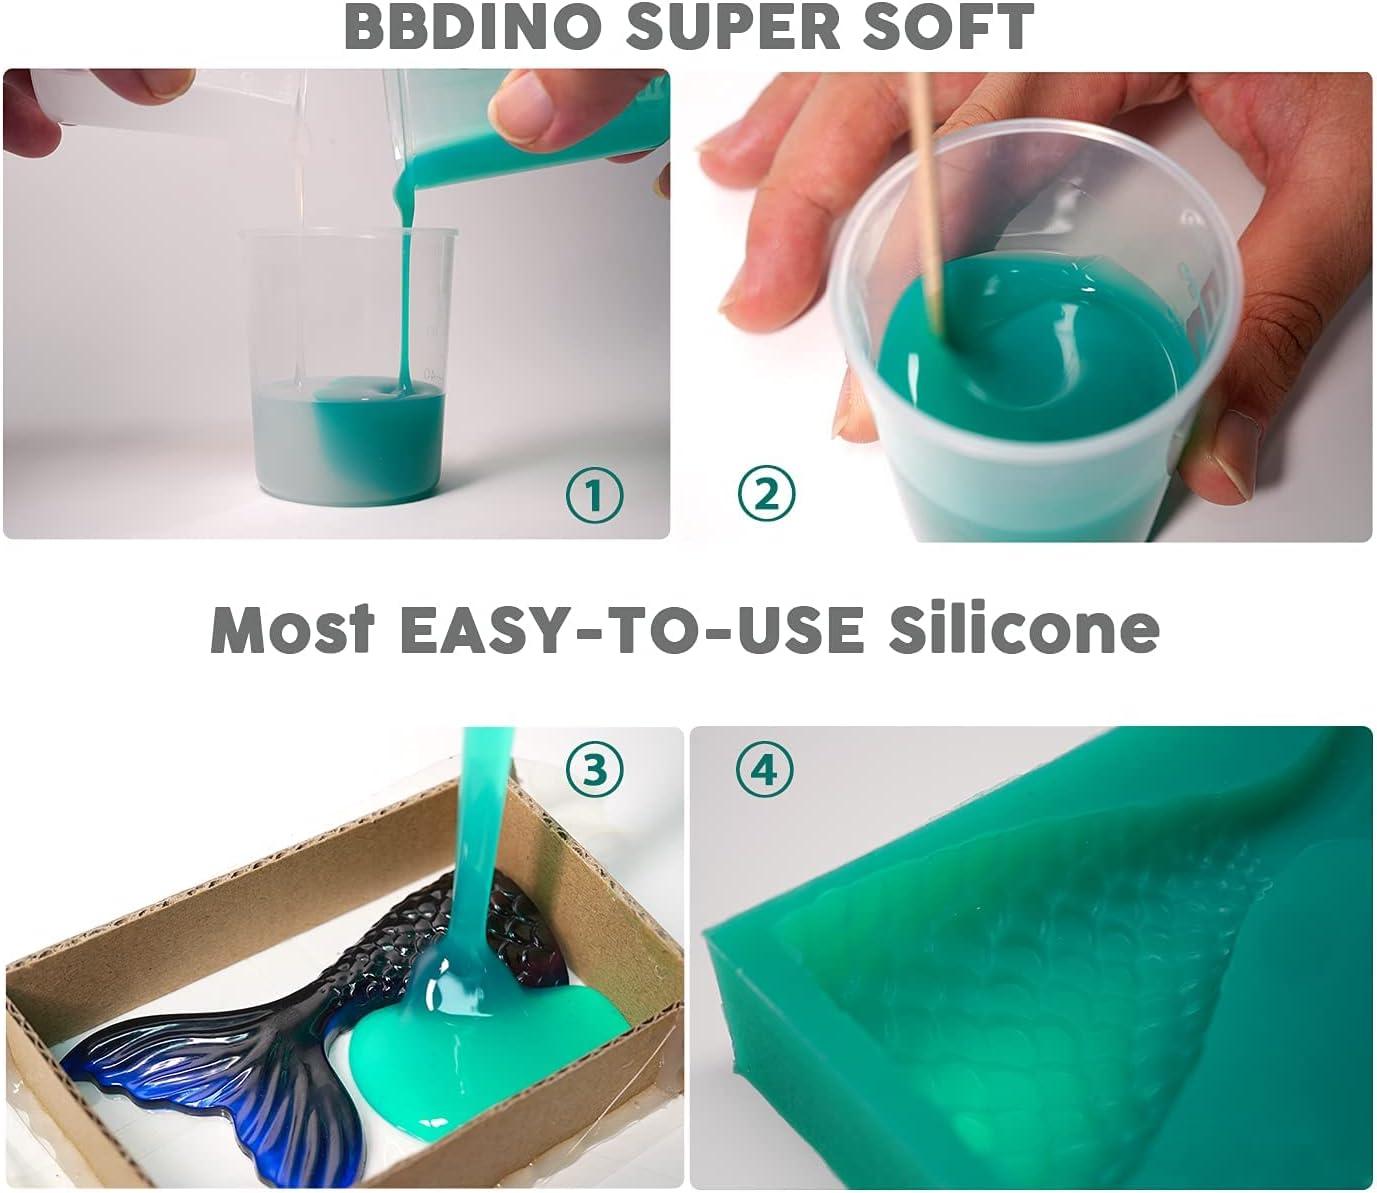 BBDINO Silicone Mold Making Kit, Super Elastic Mold Comoros